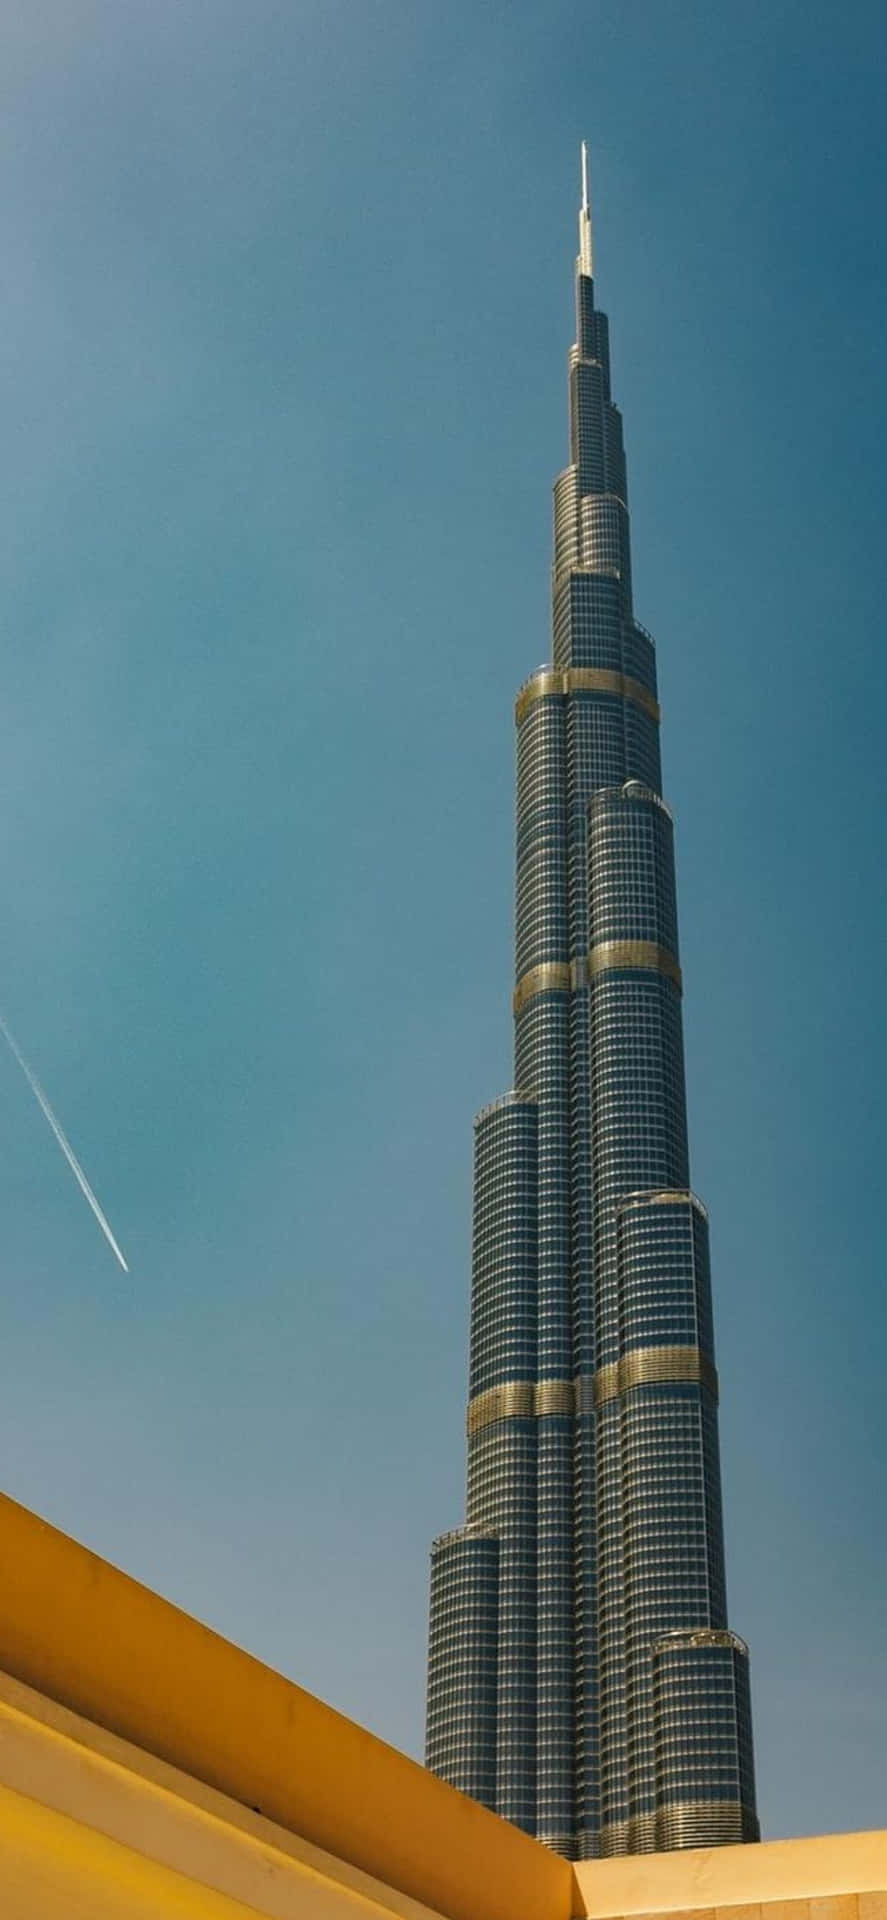 Latorre Burj Khalifa A Dubai